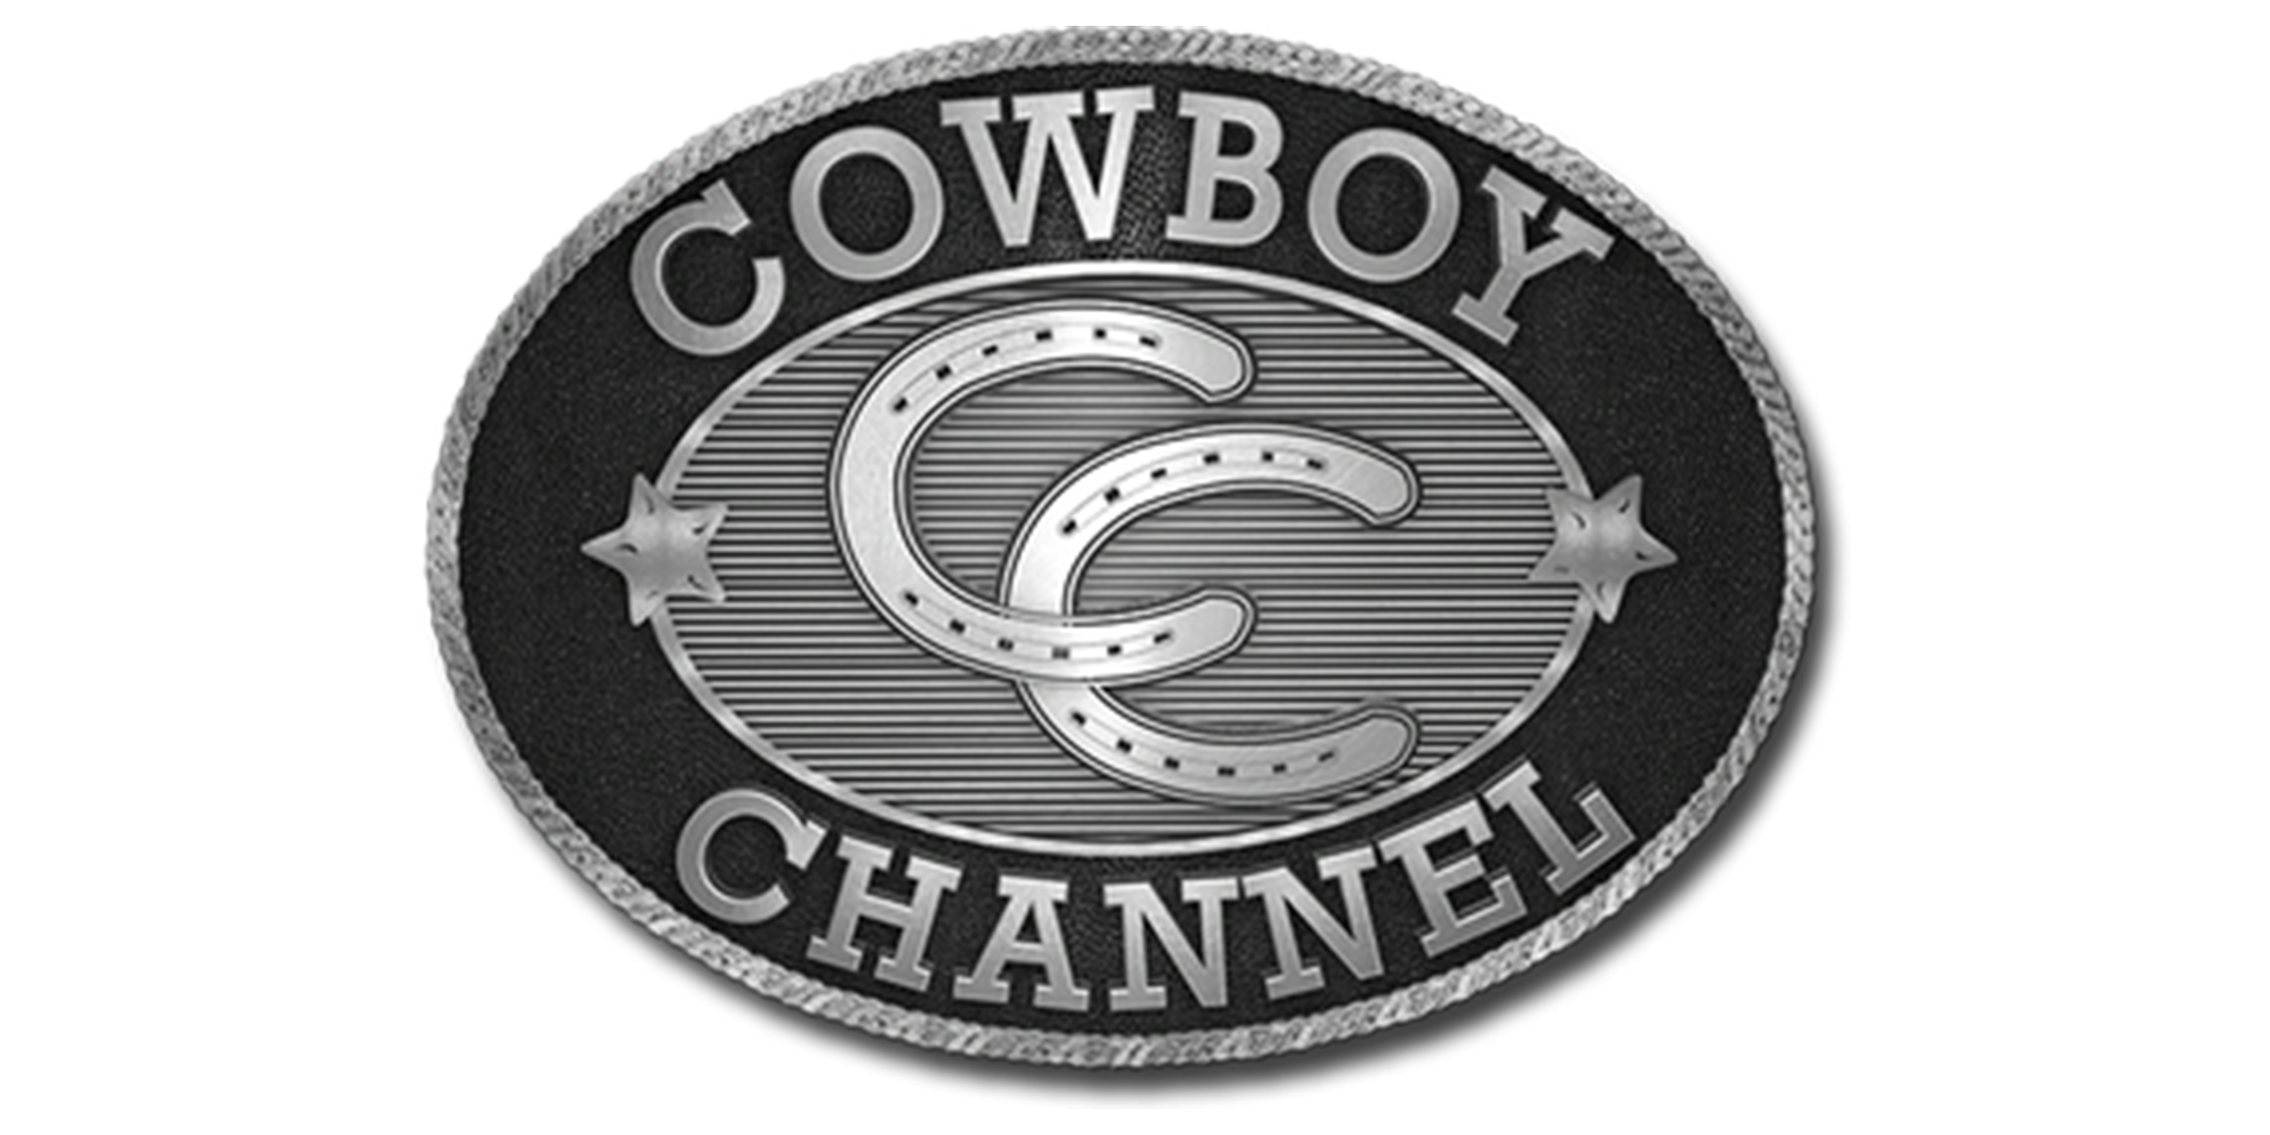 cowboy channel live stream